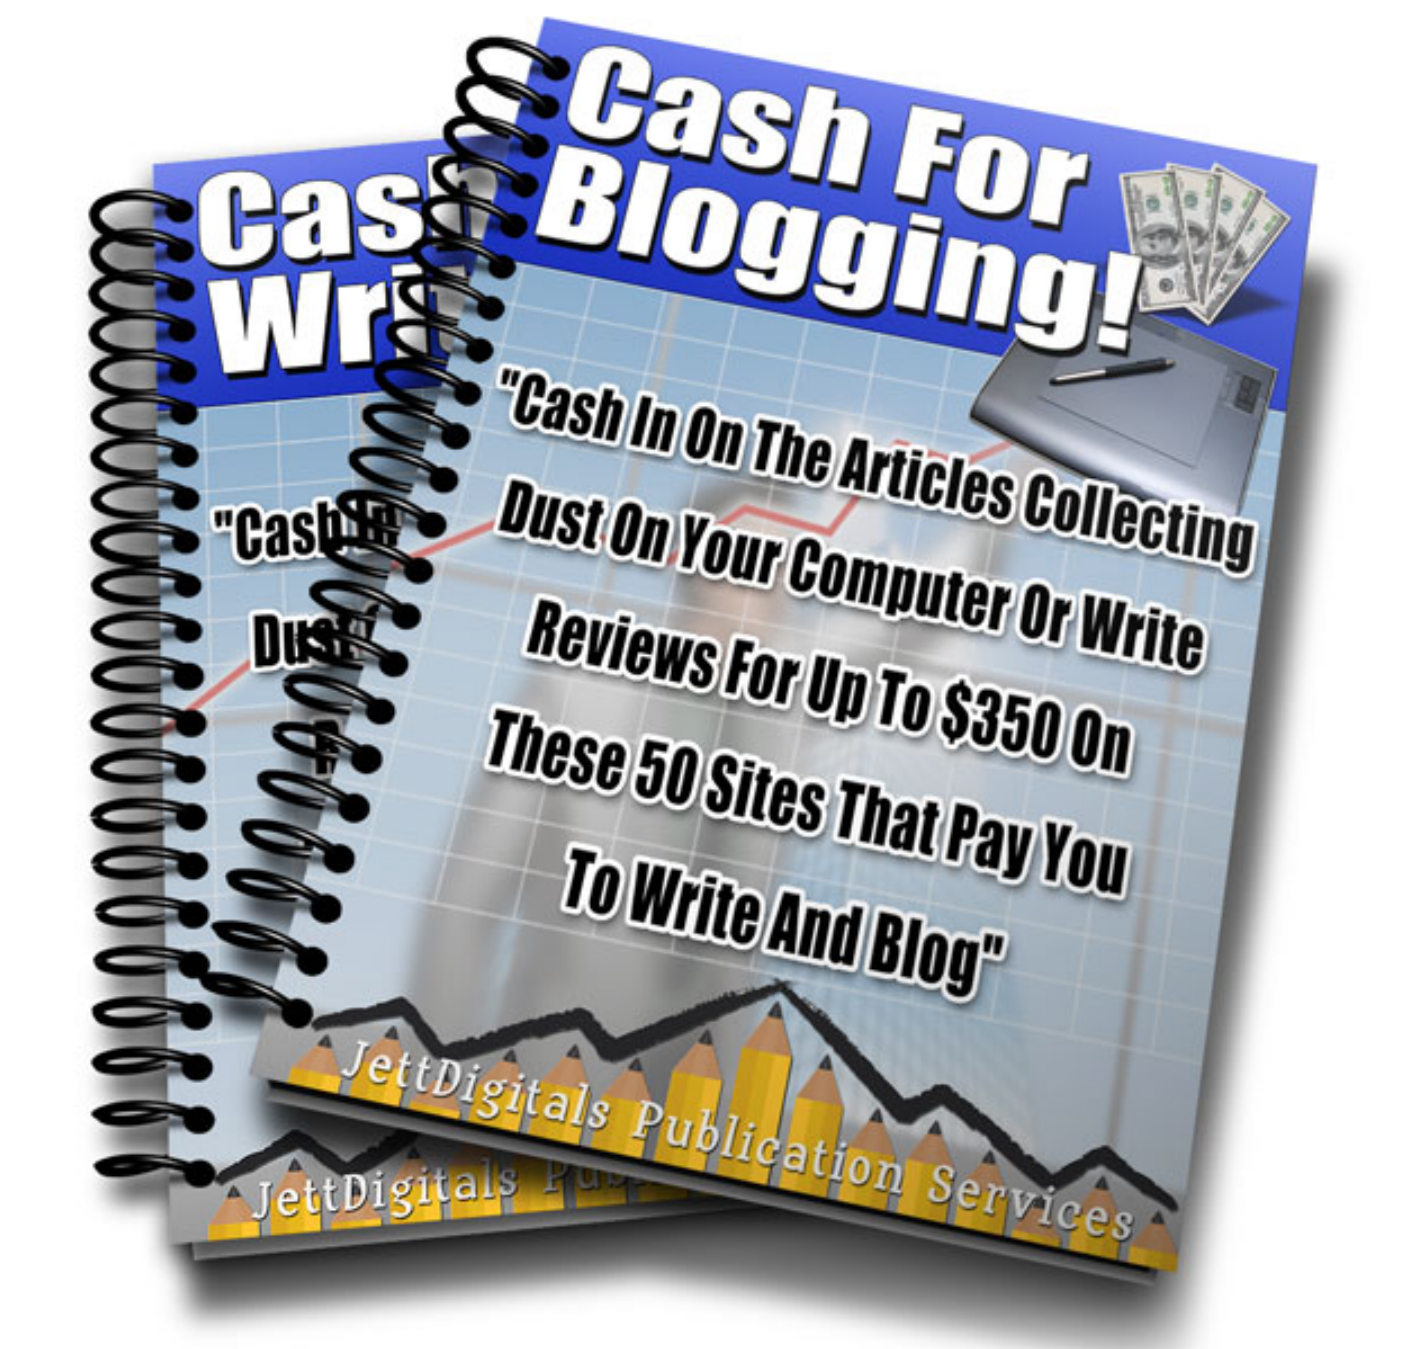 Cash For Blogging Part 2.